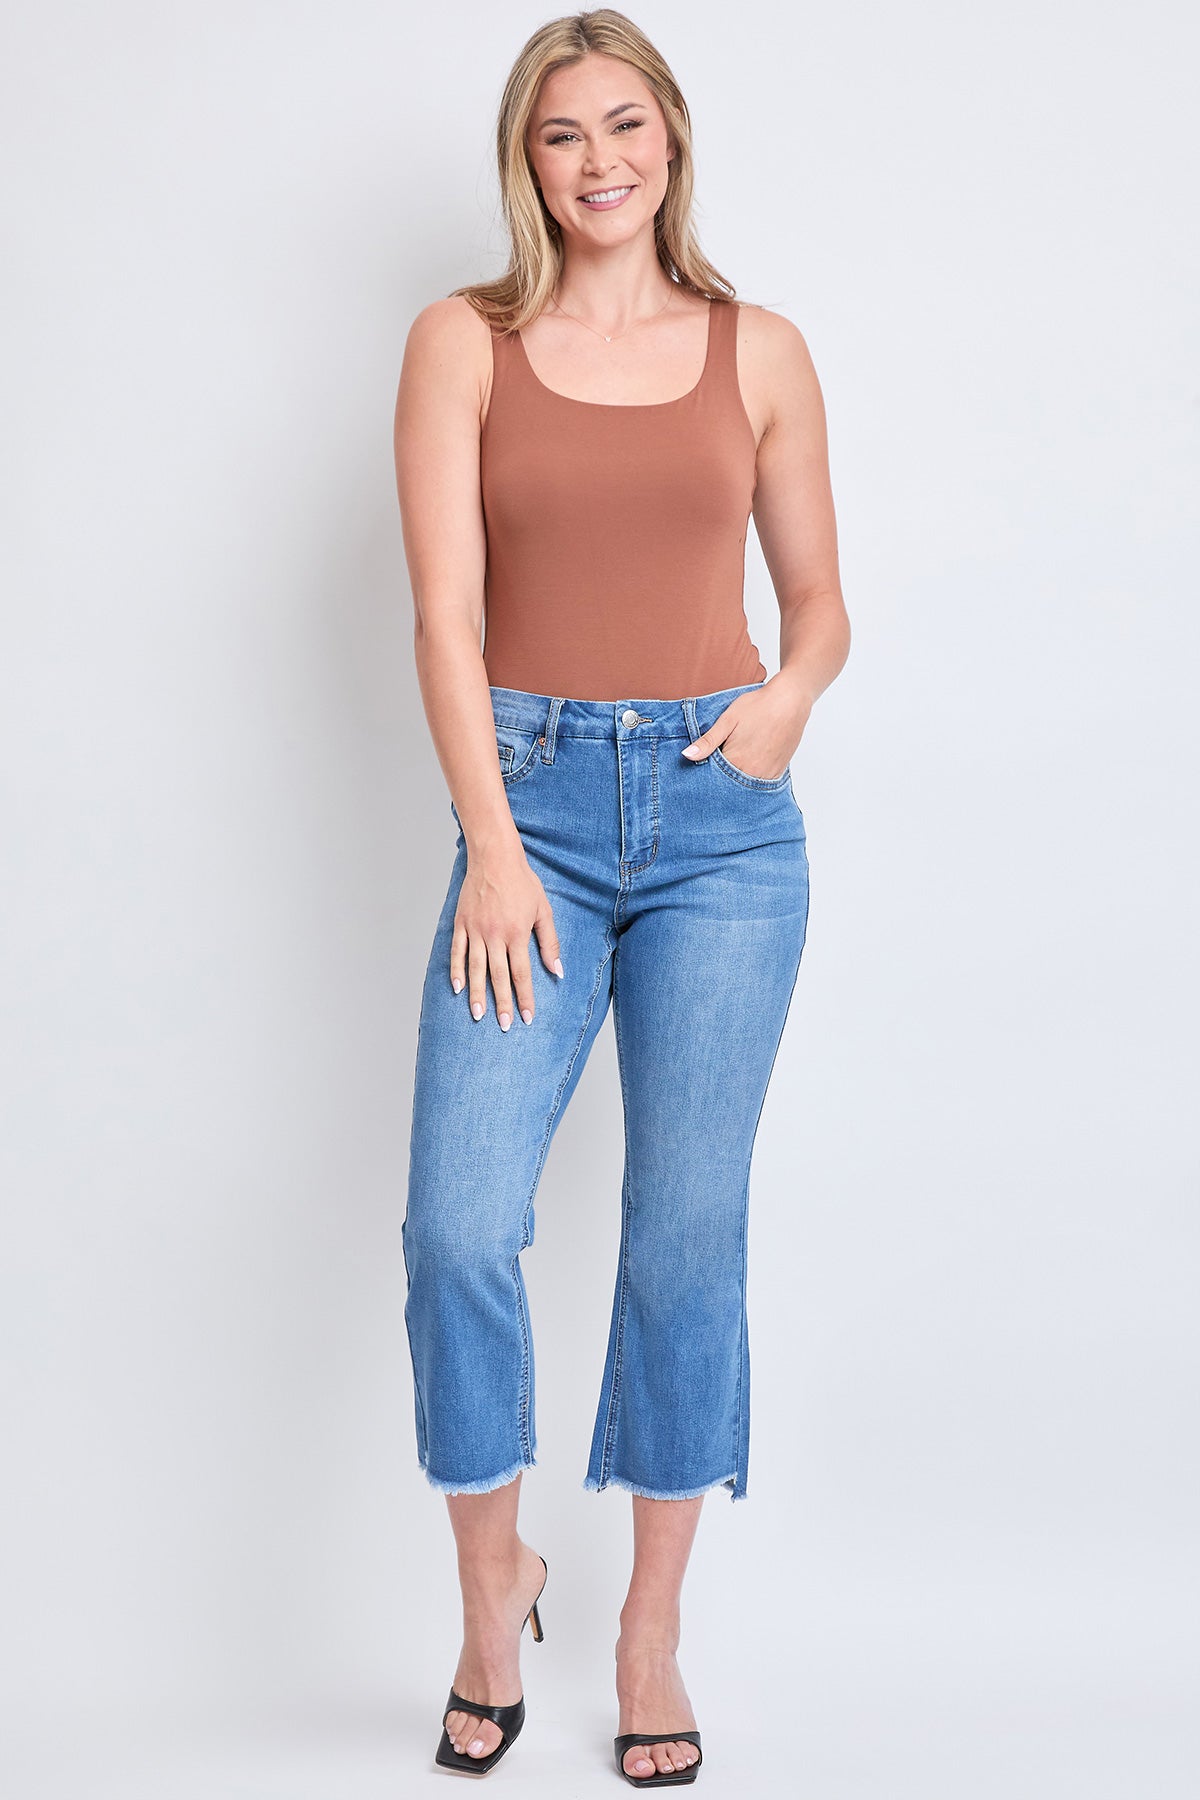 Women’s Mid-Rise Studded Cross Flap Pocket Bootcut Jean